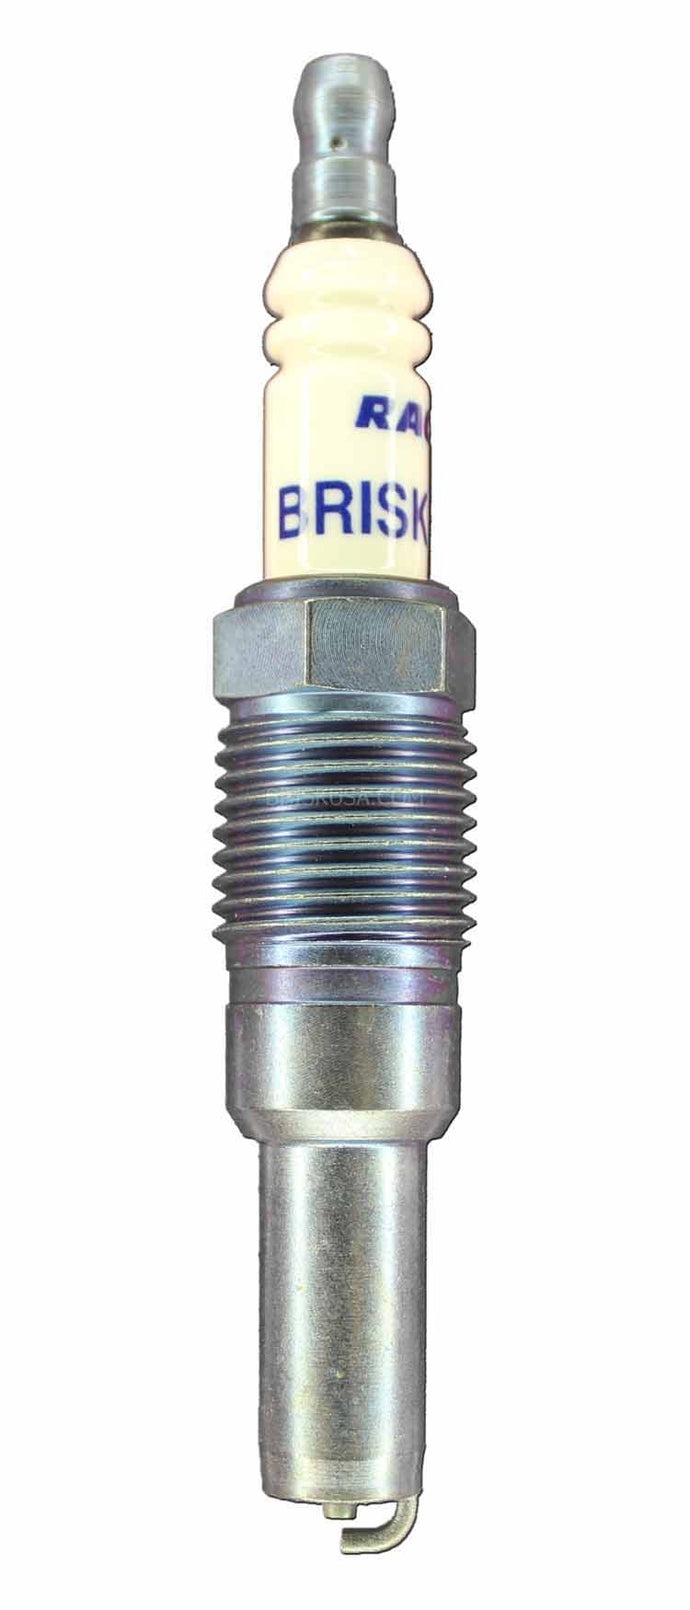 Brisk Silver Racing 3VR14S Spark Plug